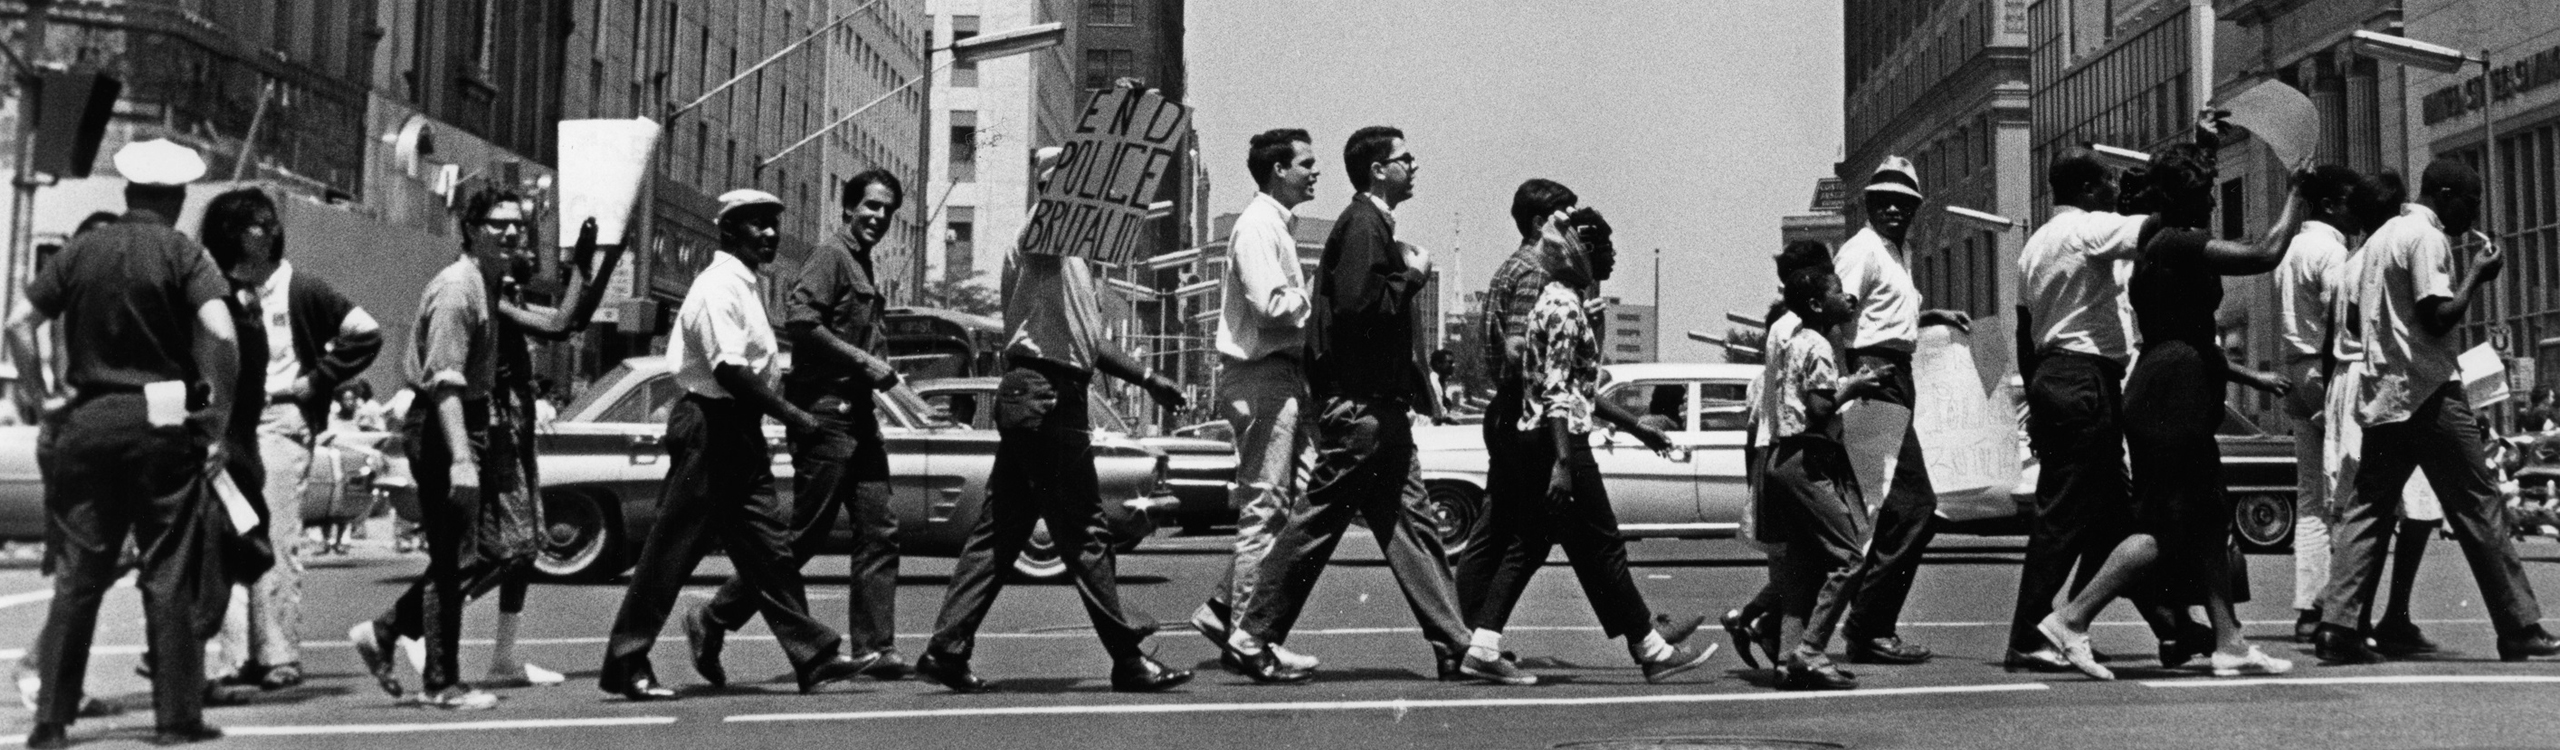 Newark Community Union Project march. Newark, NJ, 1965. Doug Eldridge Collection.